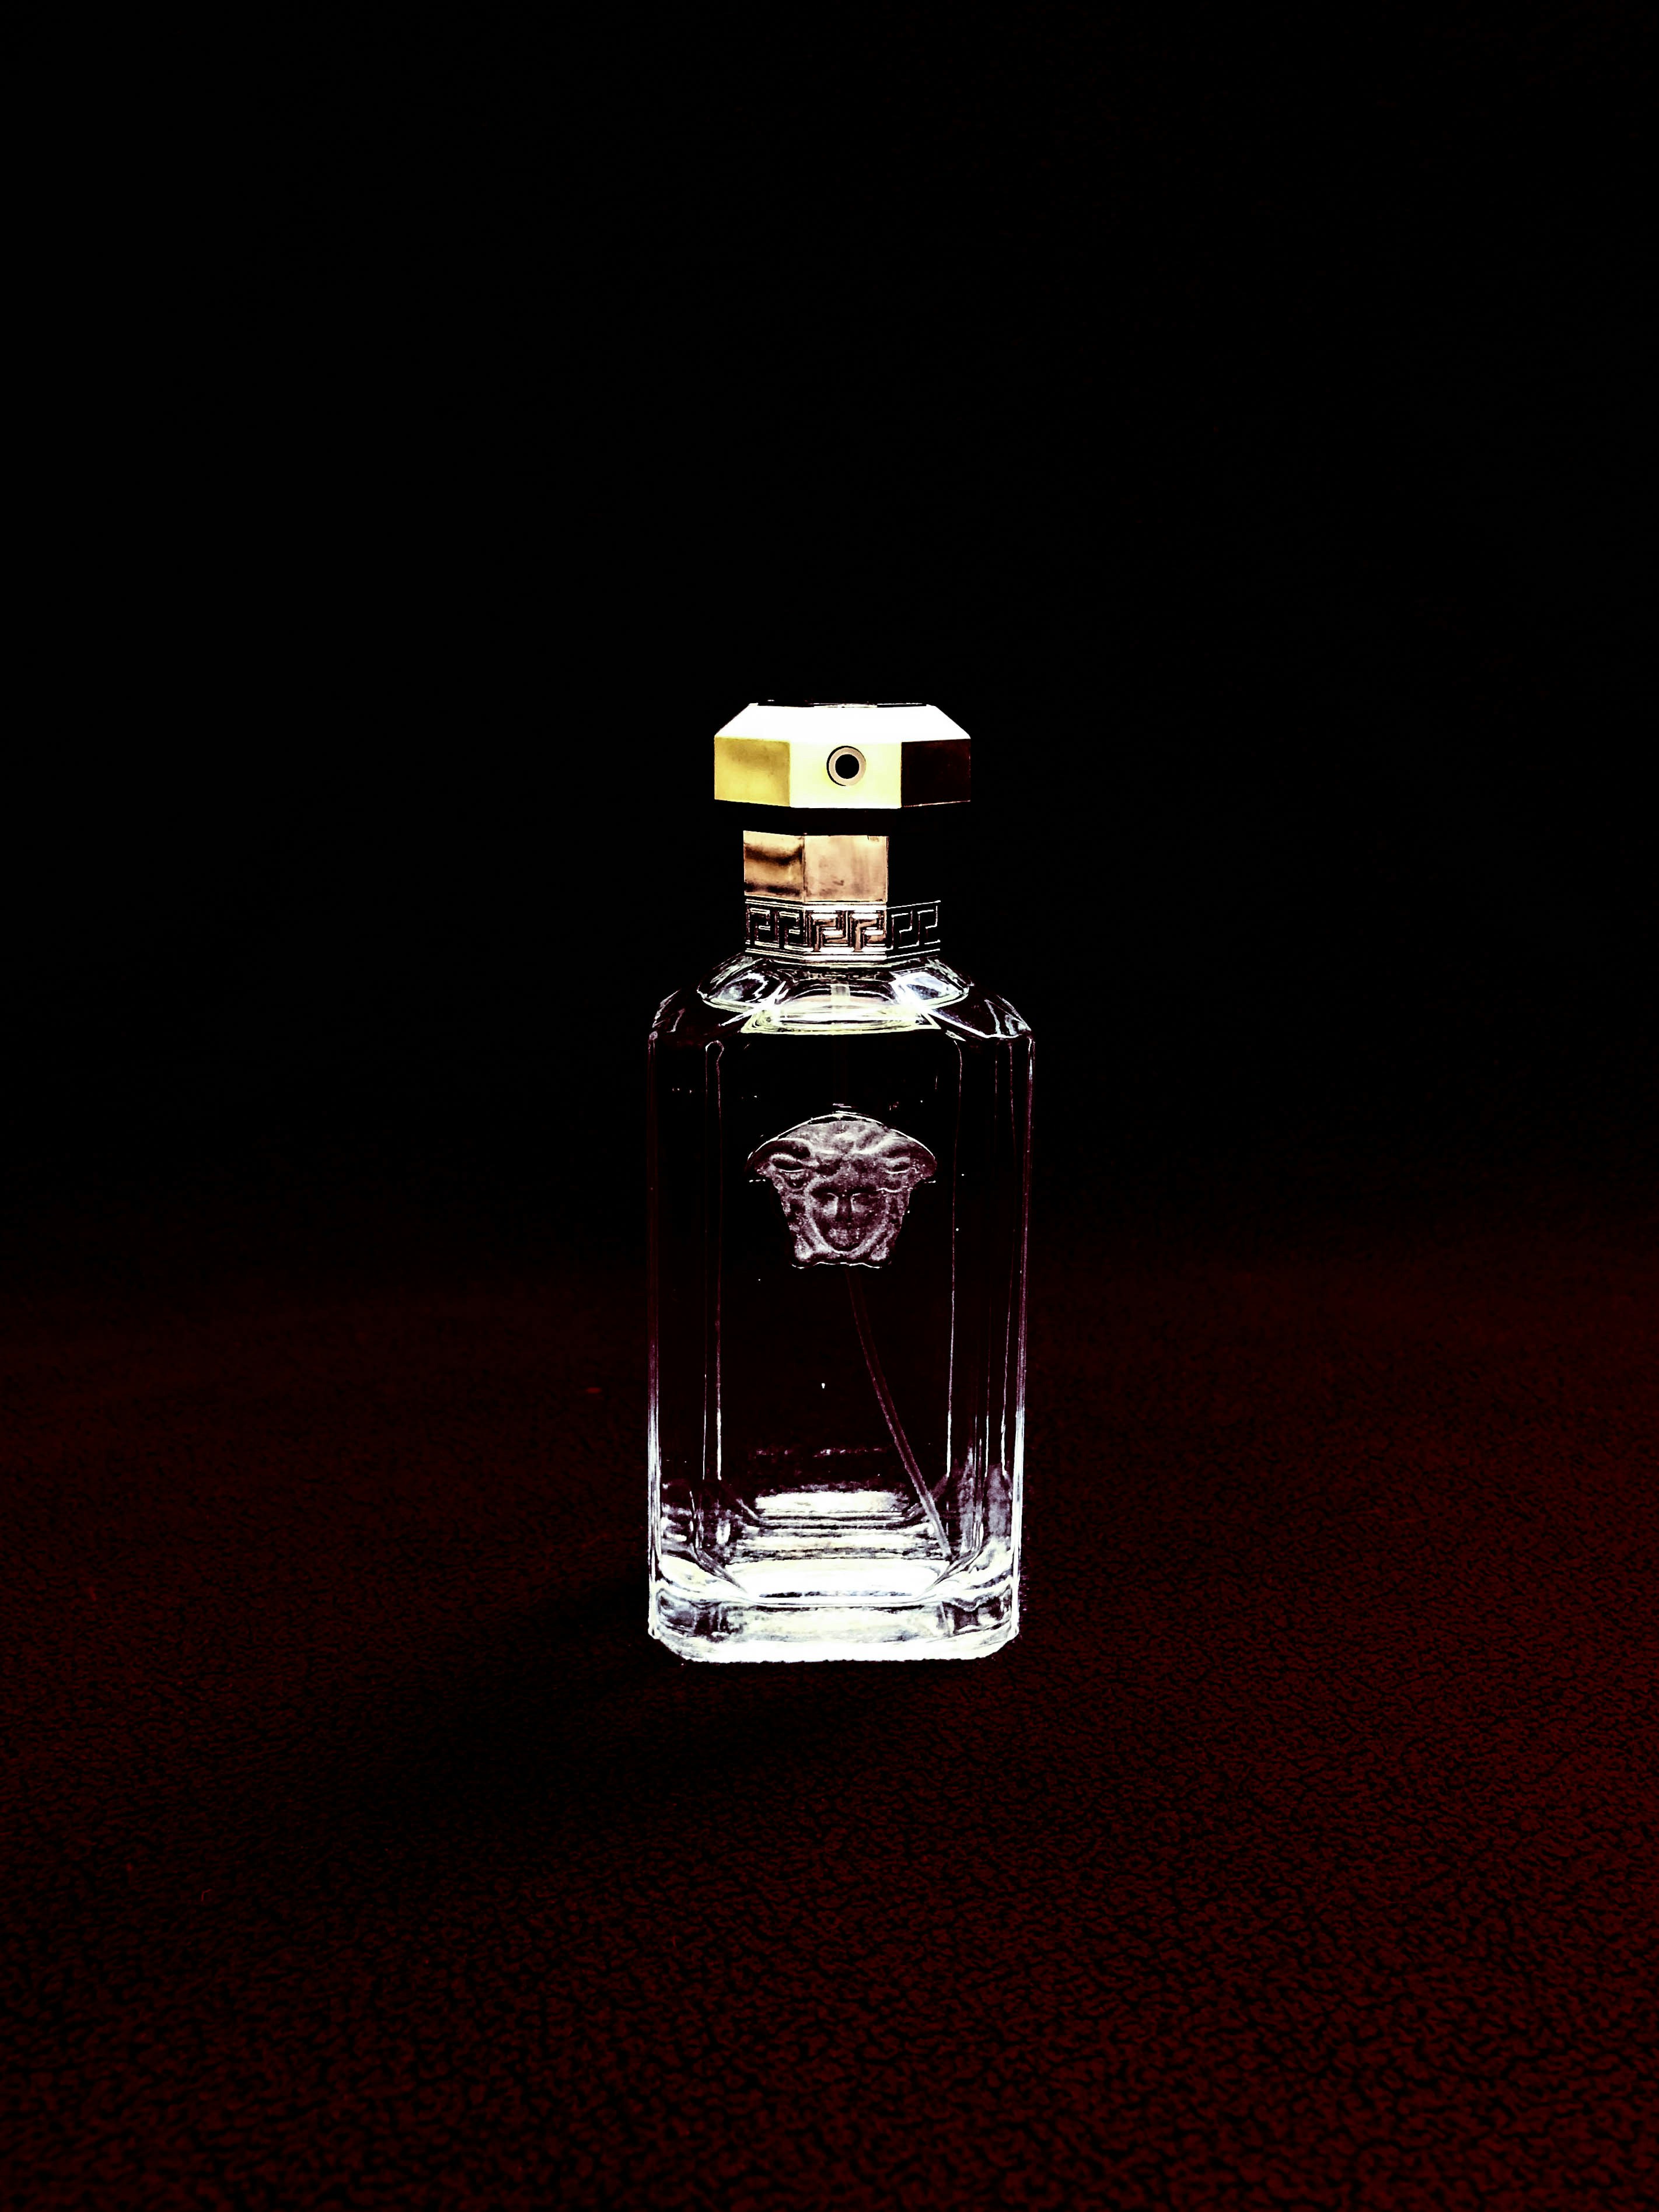 versace cologne clear bottle